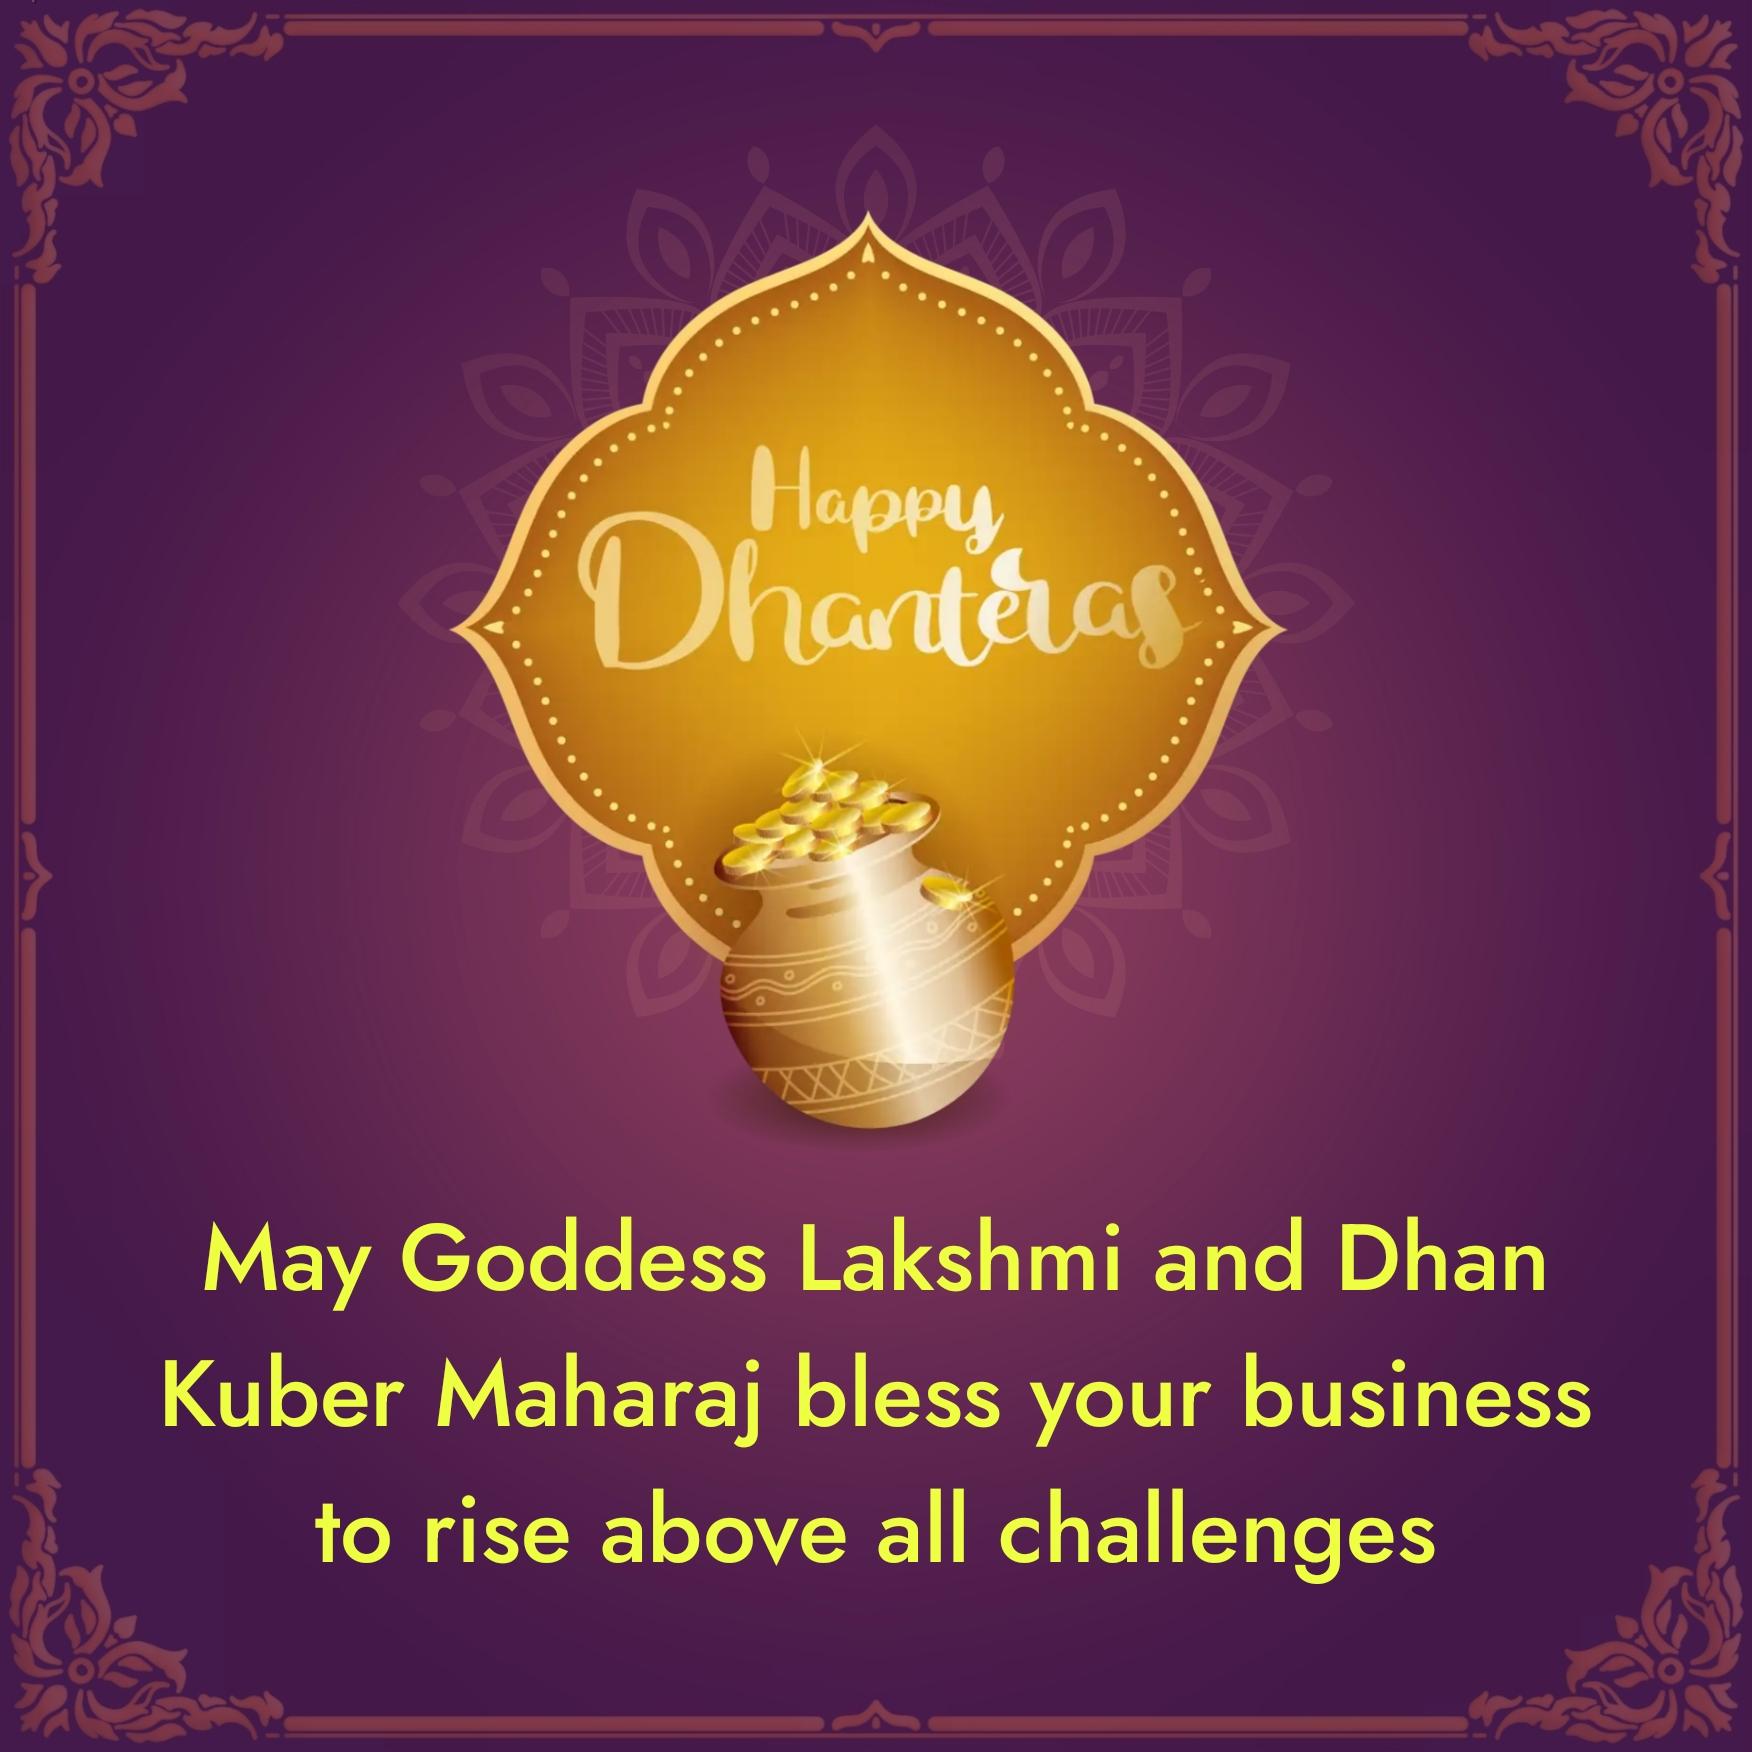 May Goddess Lakshmi and Dhan Kuber Maharaj